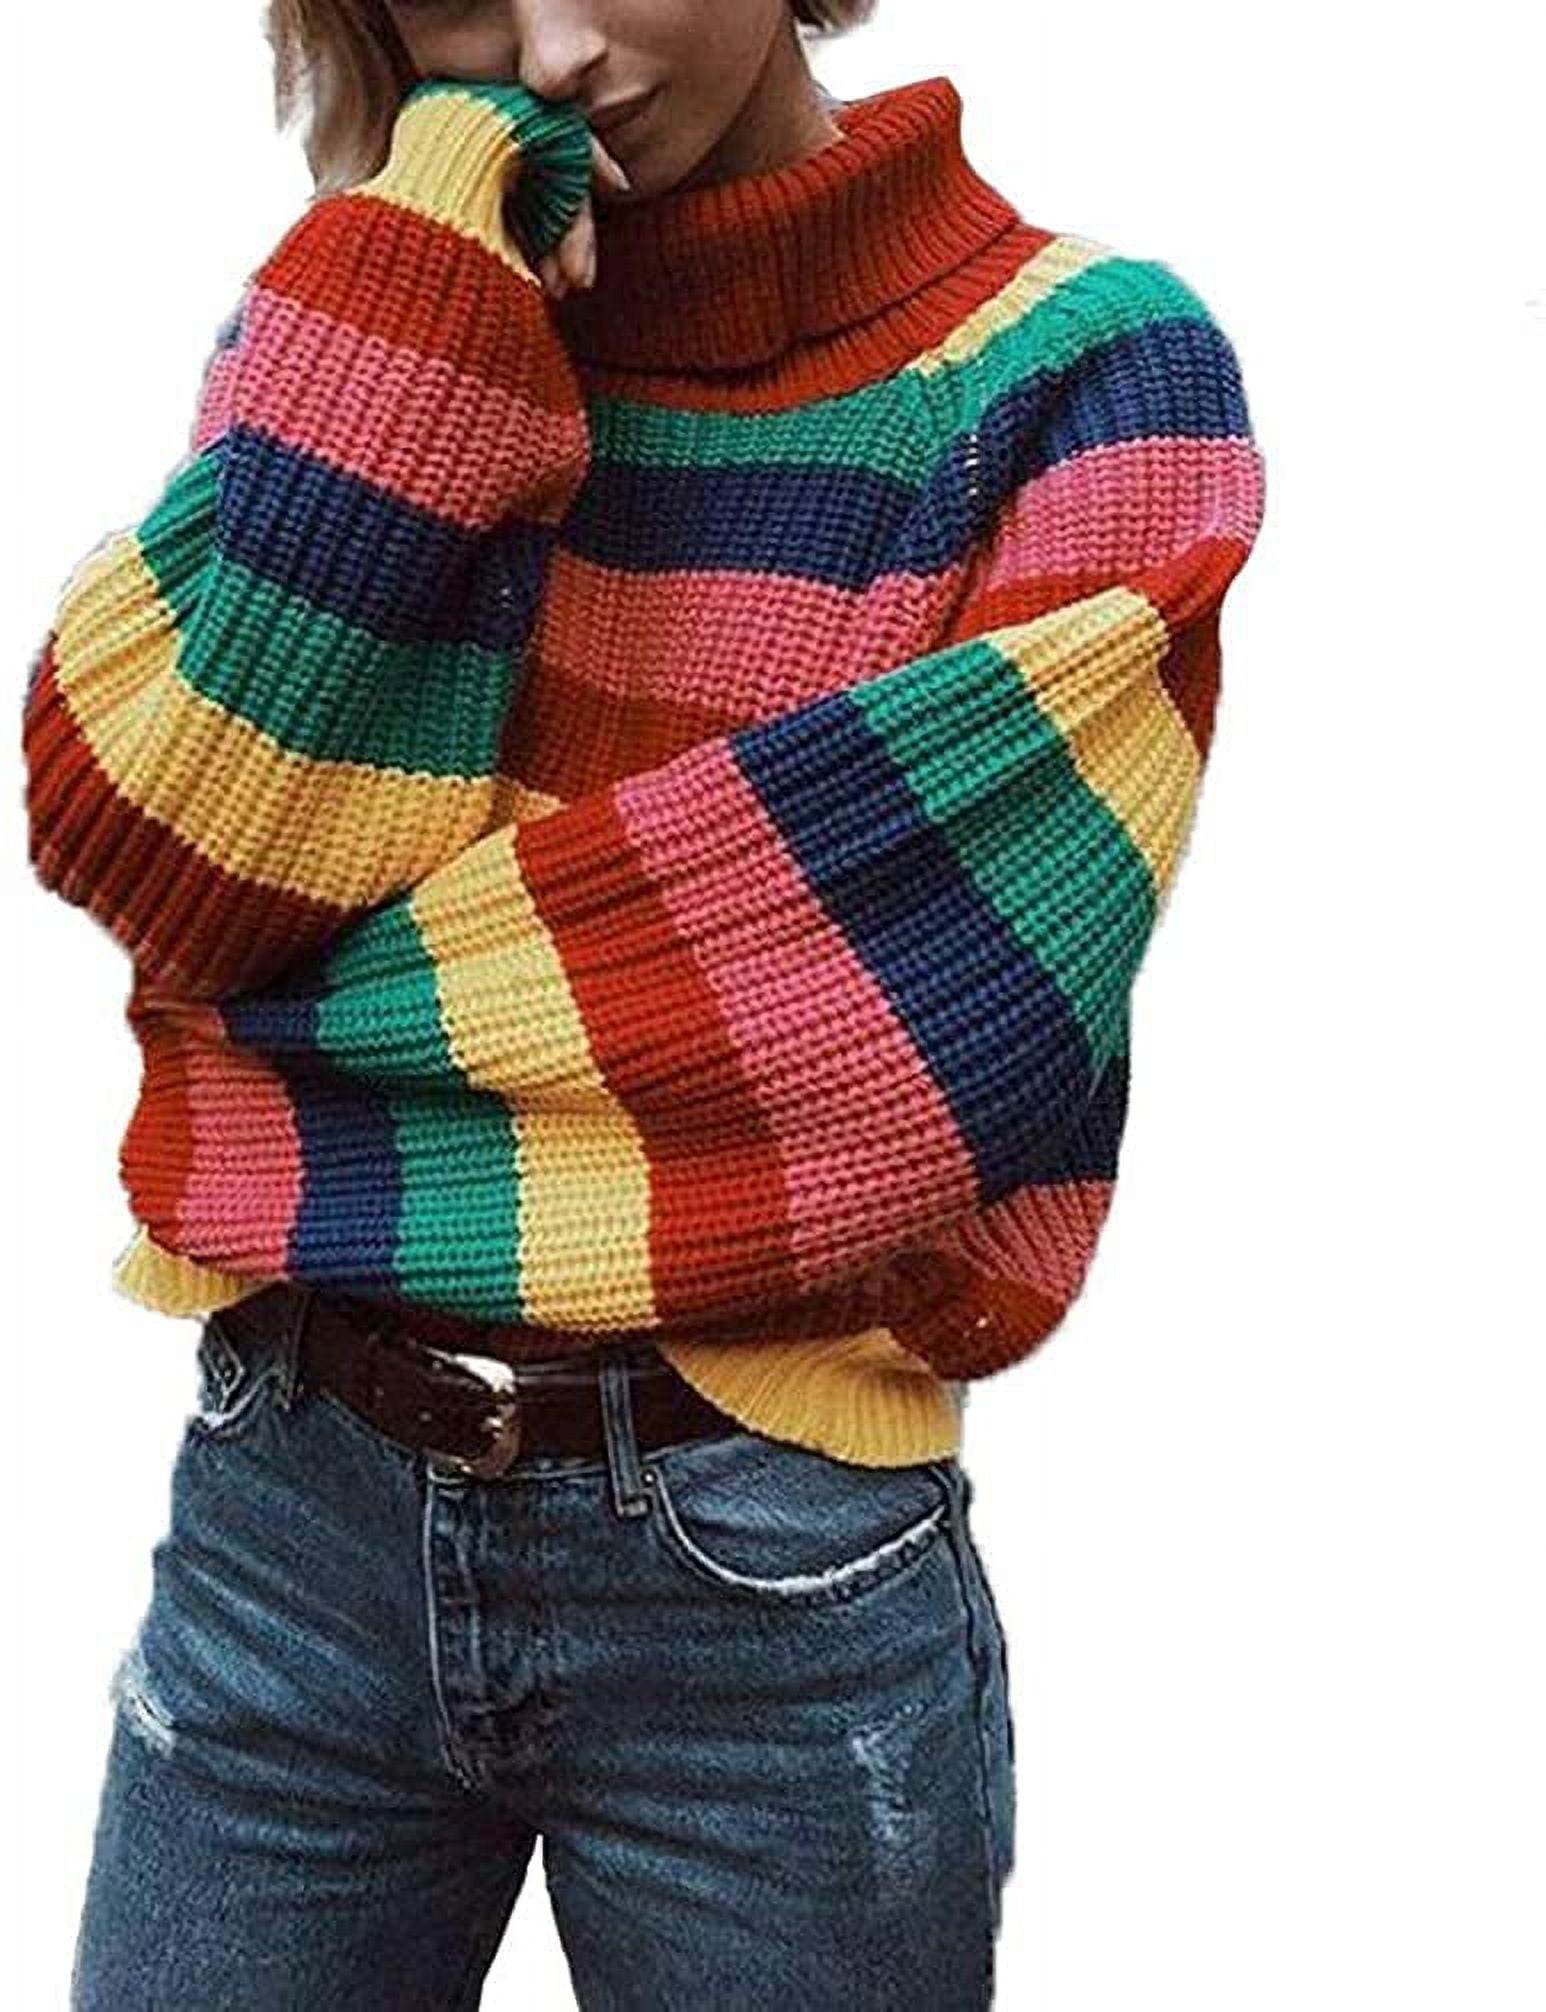 XFLWAM Turtleneck Sweater Women Oversized Cowl Neck Sweater Cable